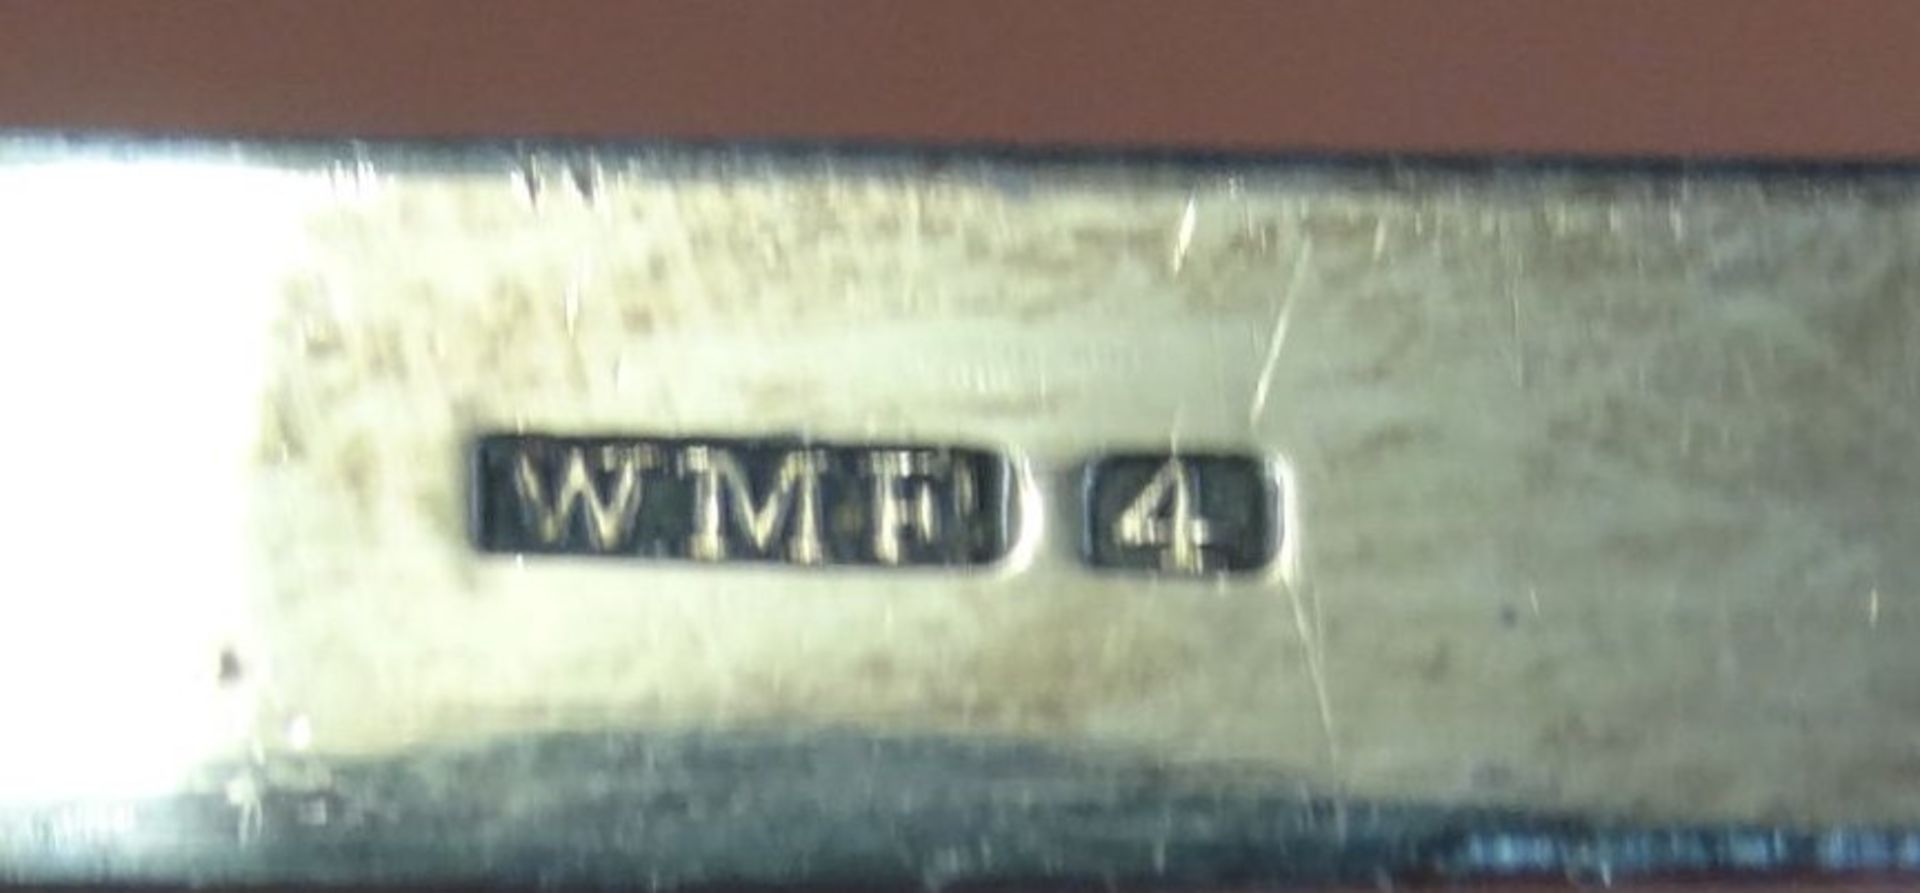 grosse, versilberte Suppenkelle "WMF", L-34 cm, guter Zustand - Image 3 of 3